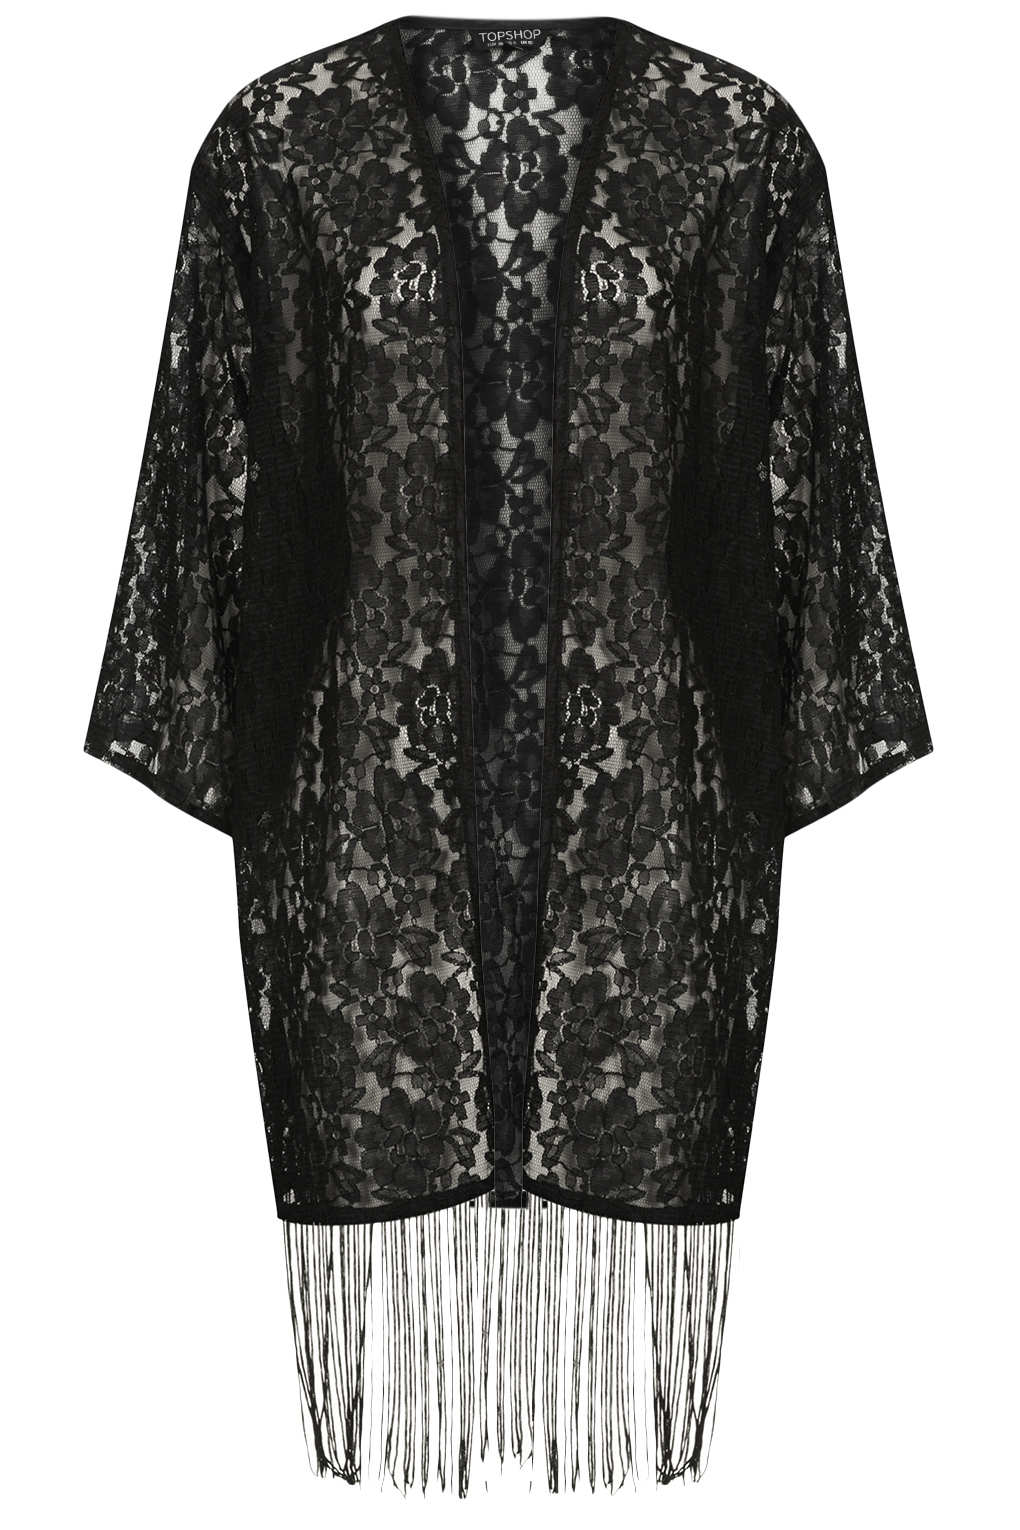 Lyst - Topshop Lace Fringe Kimono Cardigan in Black